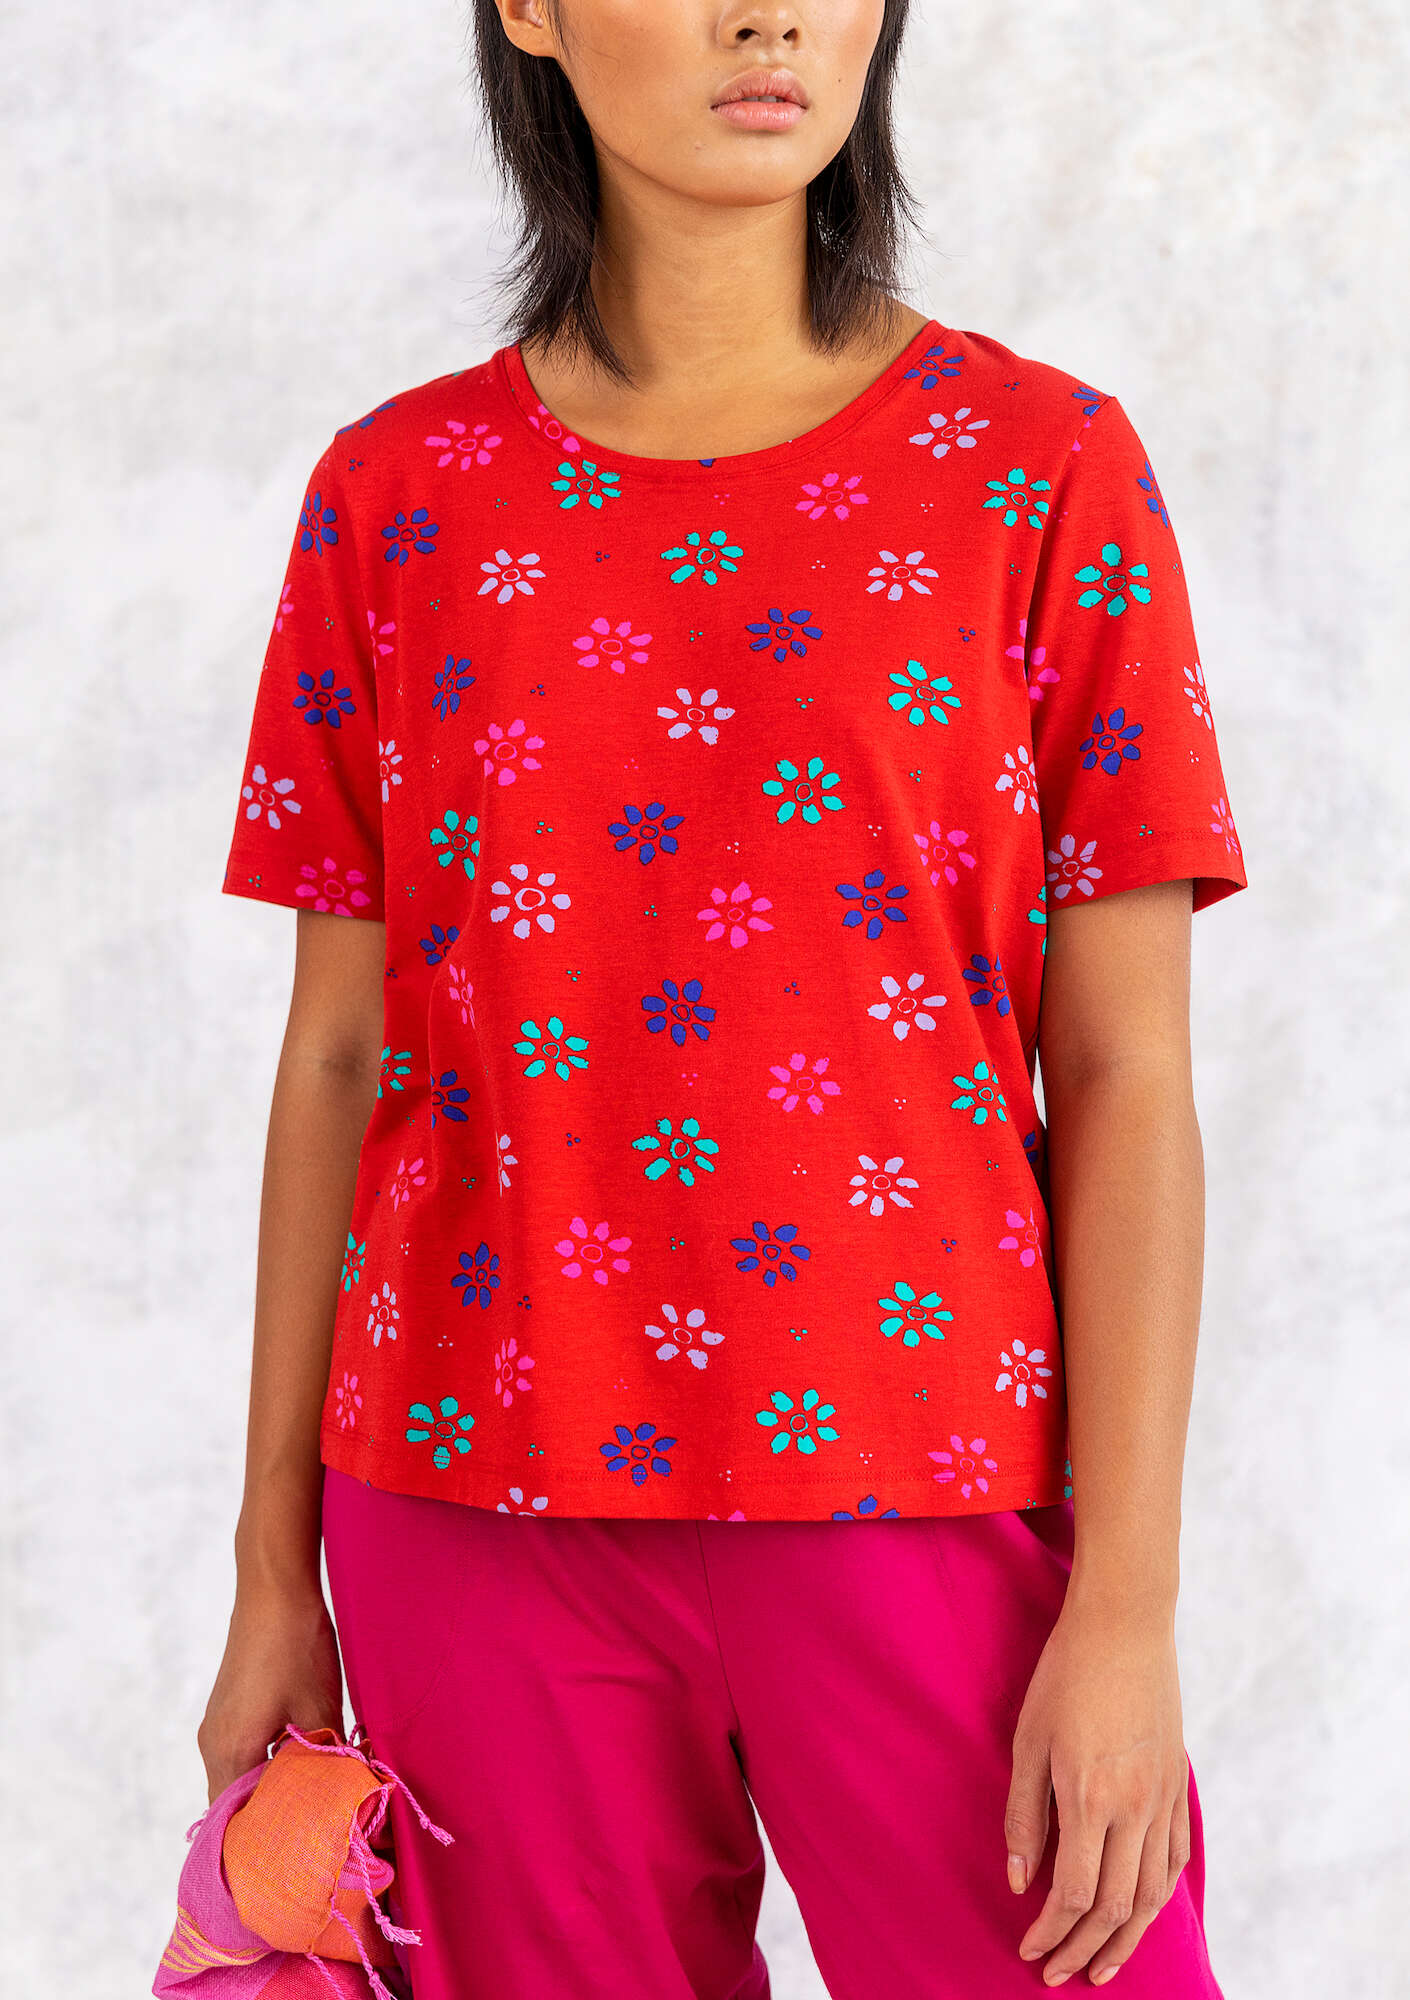 T-skjorte Ester parrot red/patterned